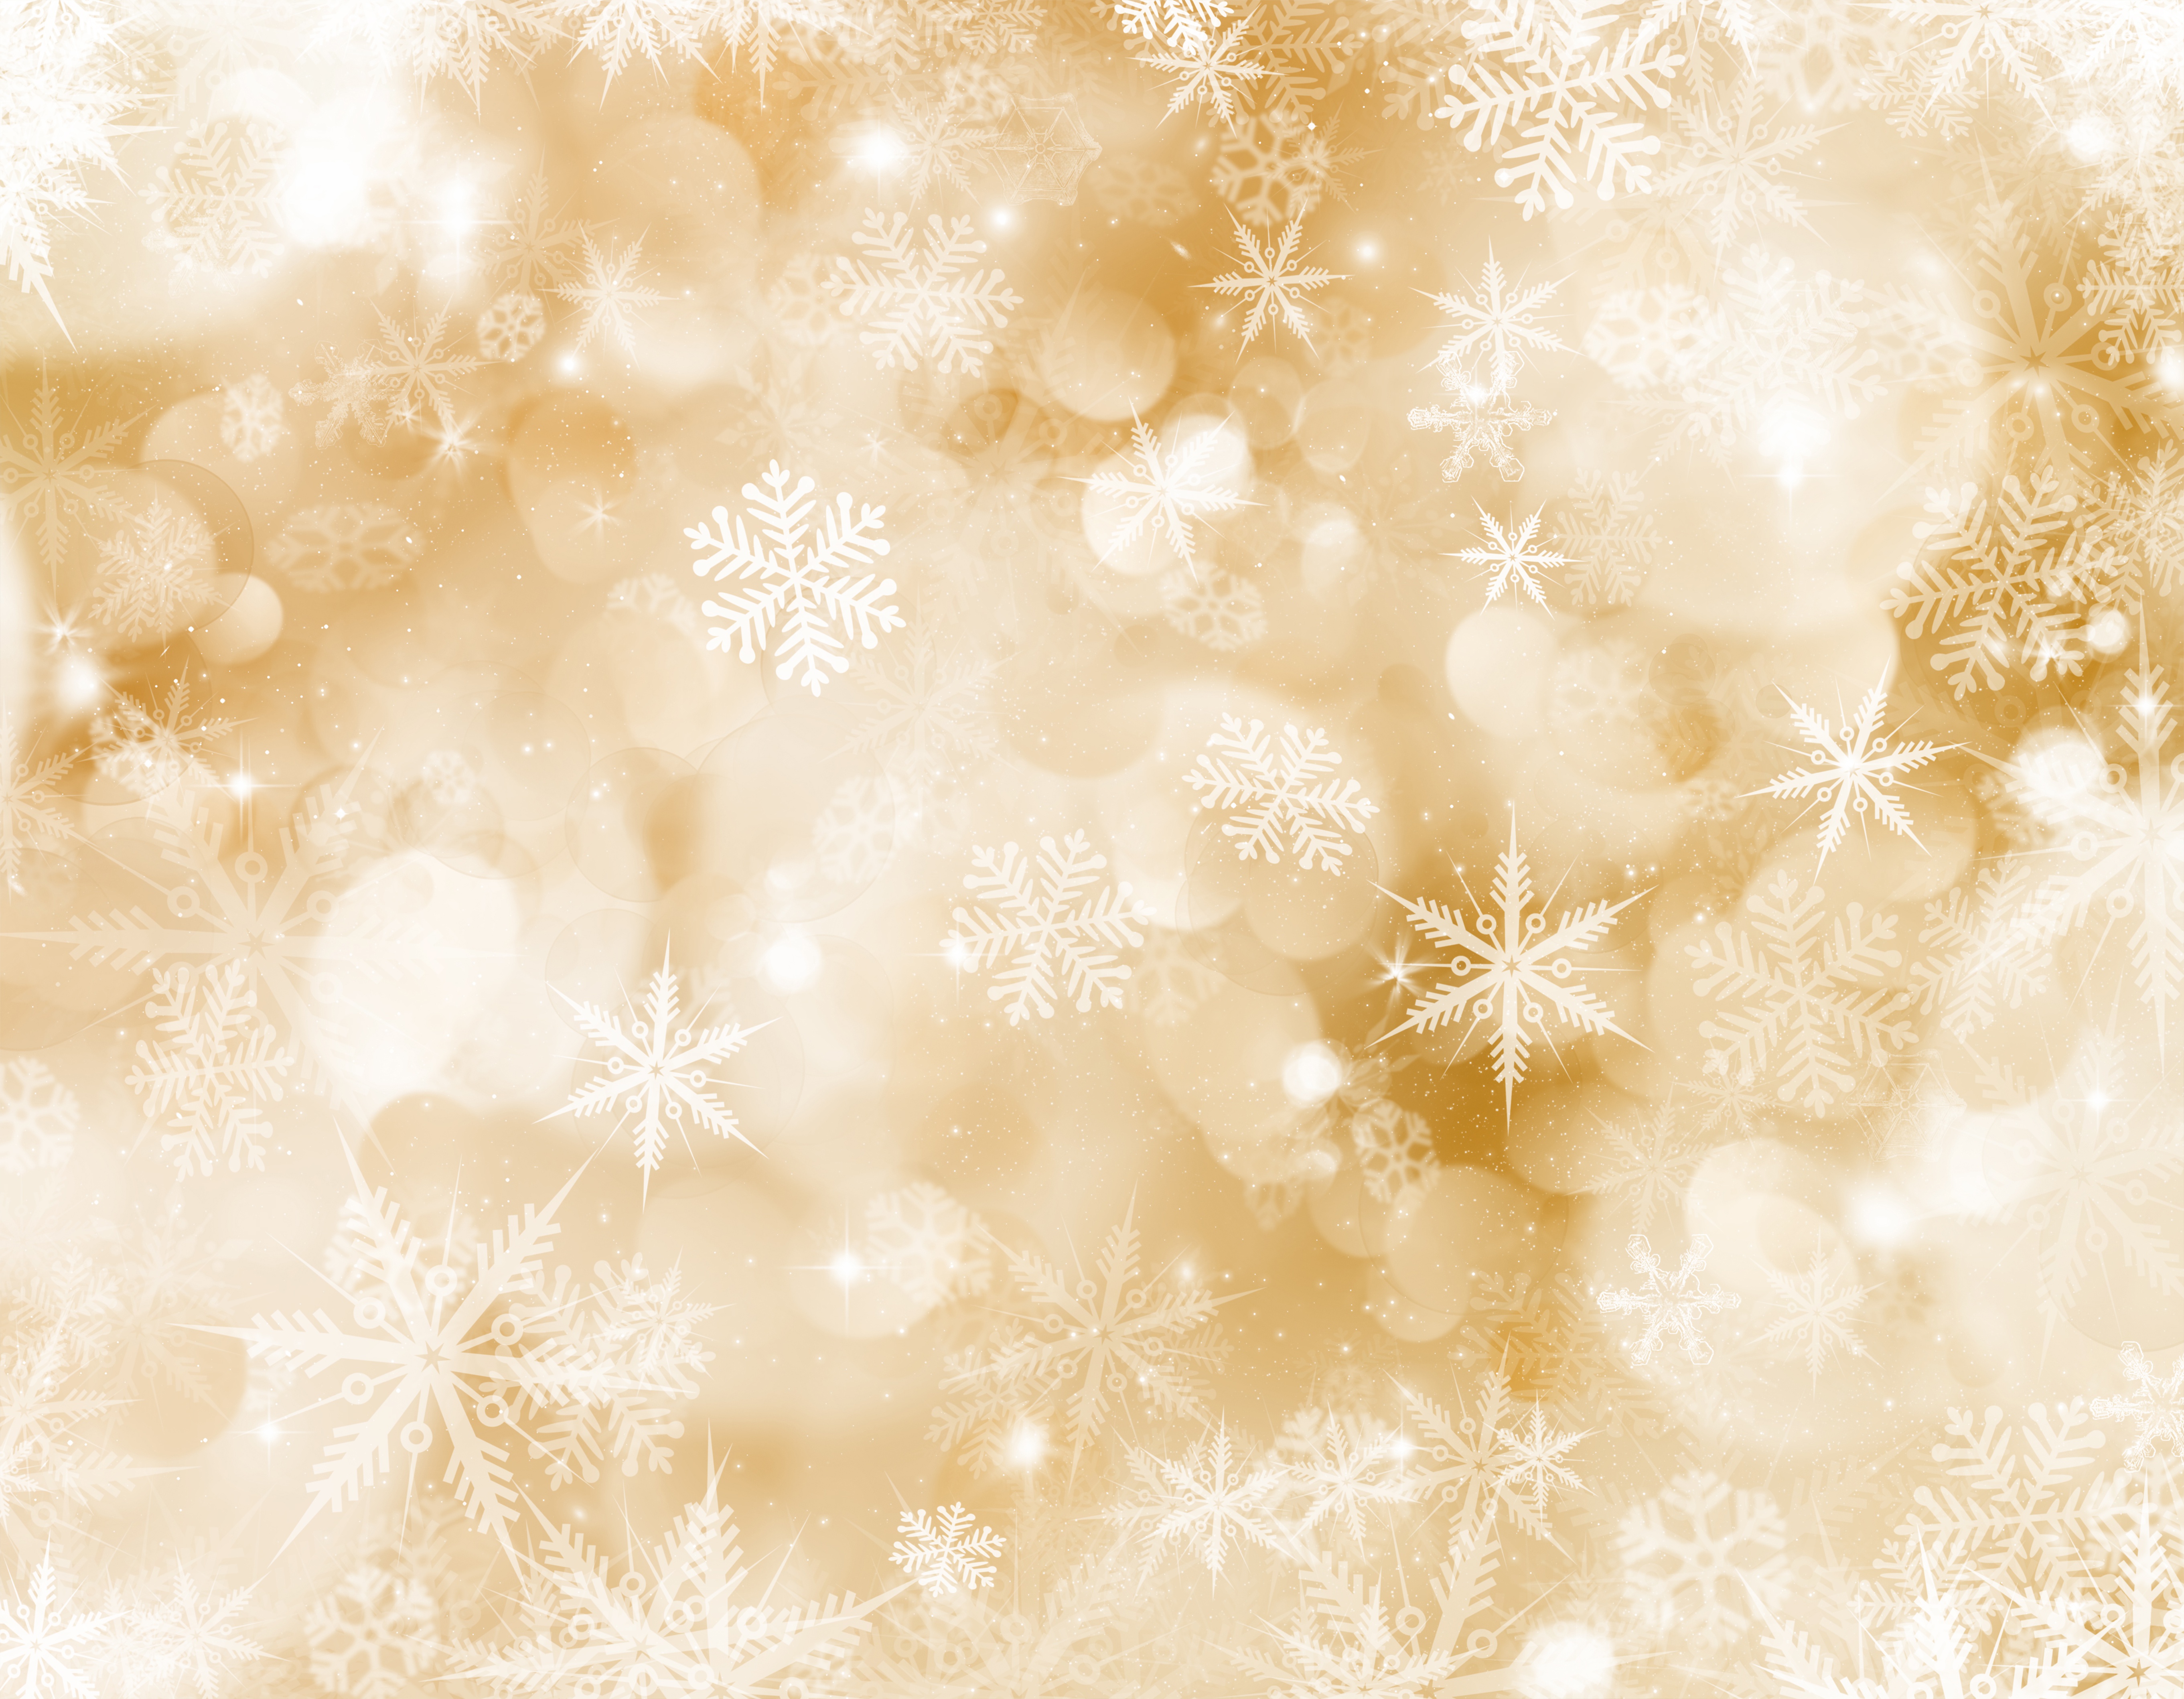 https://s1.1zoom.me/big3/970/Texture_Christmas_Snowflakes_573931_5445x4235.jpg